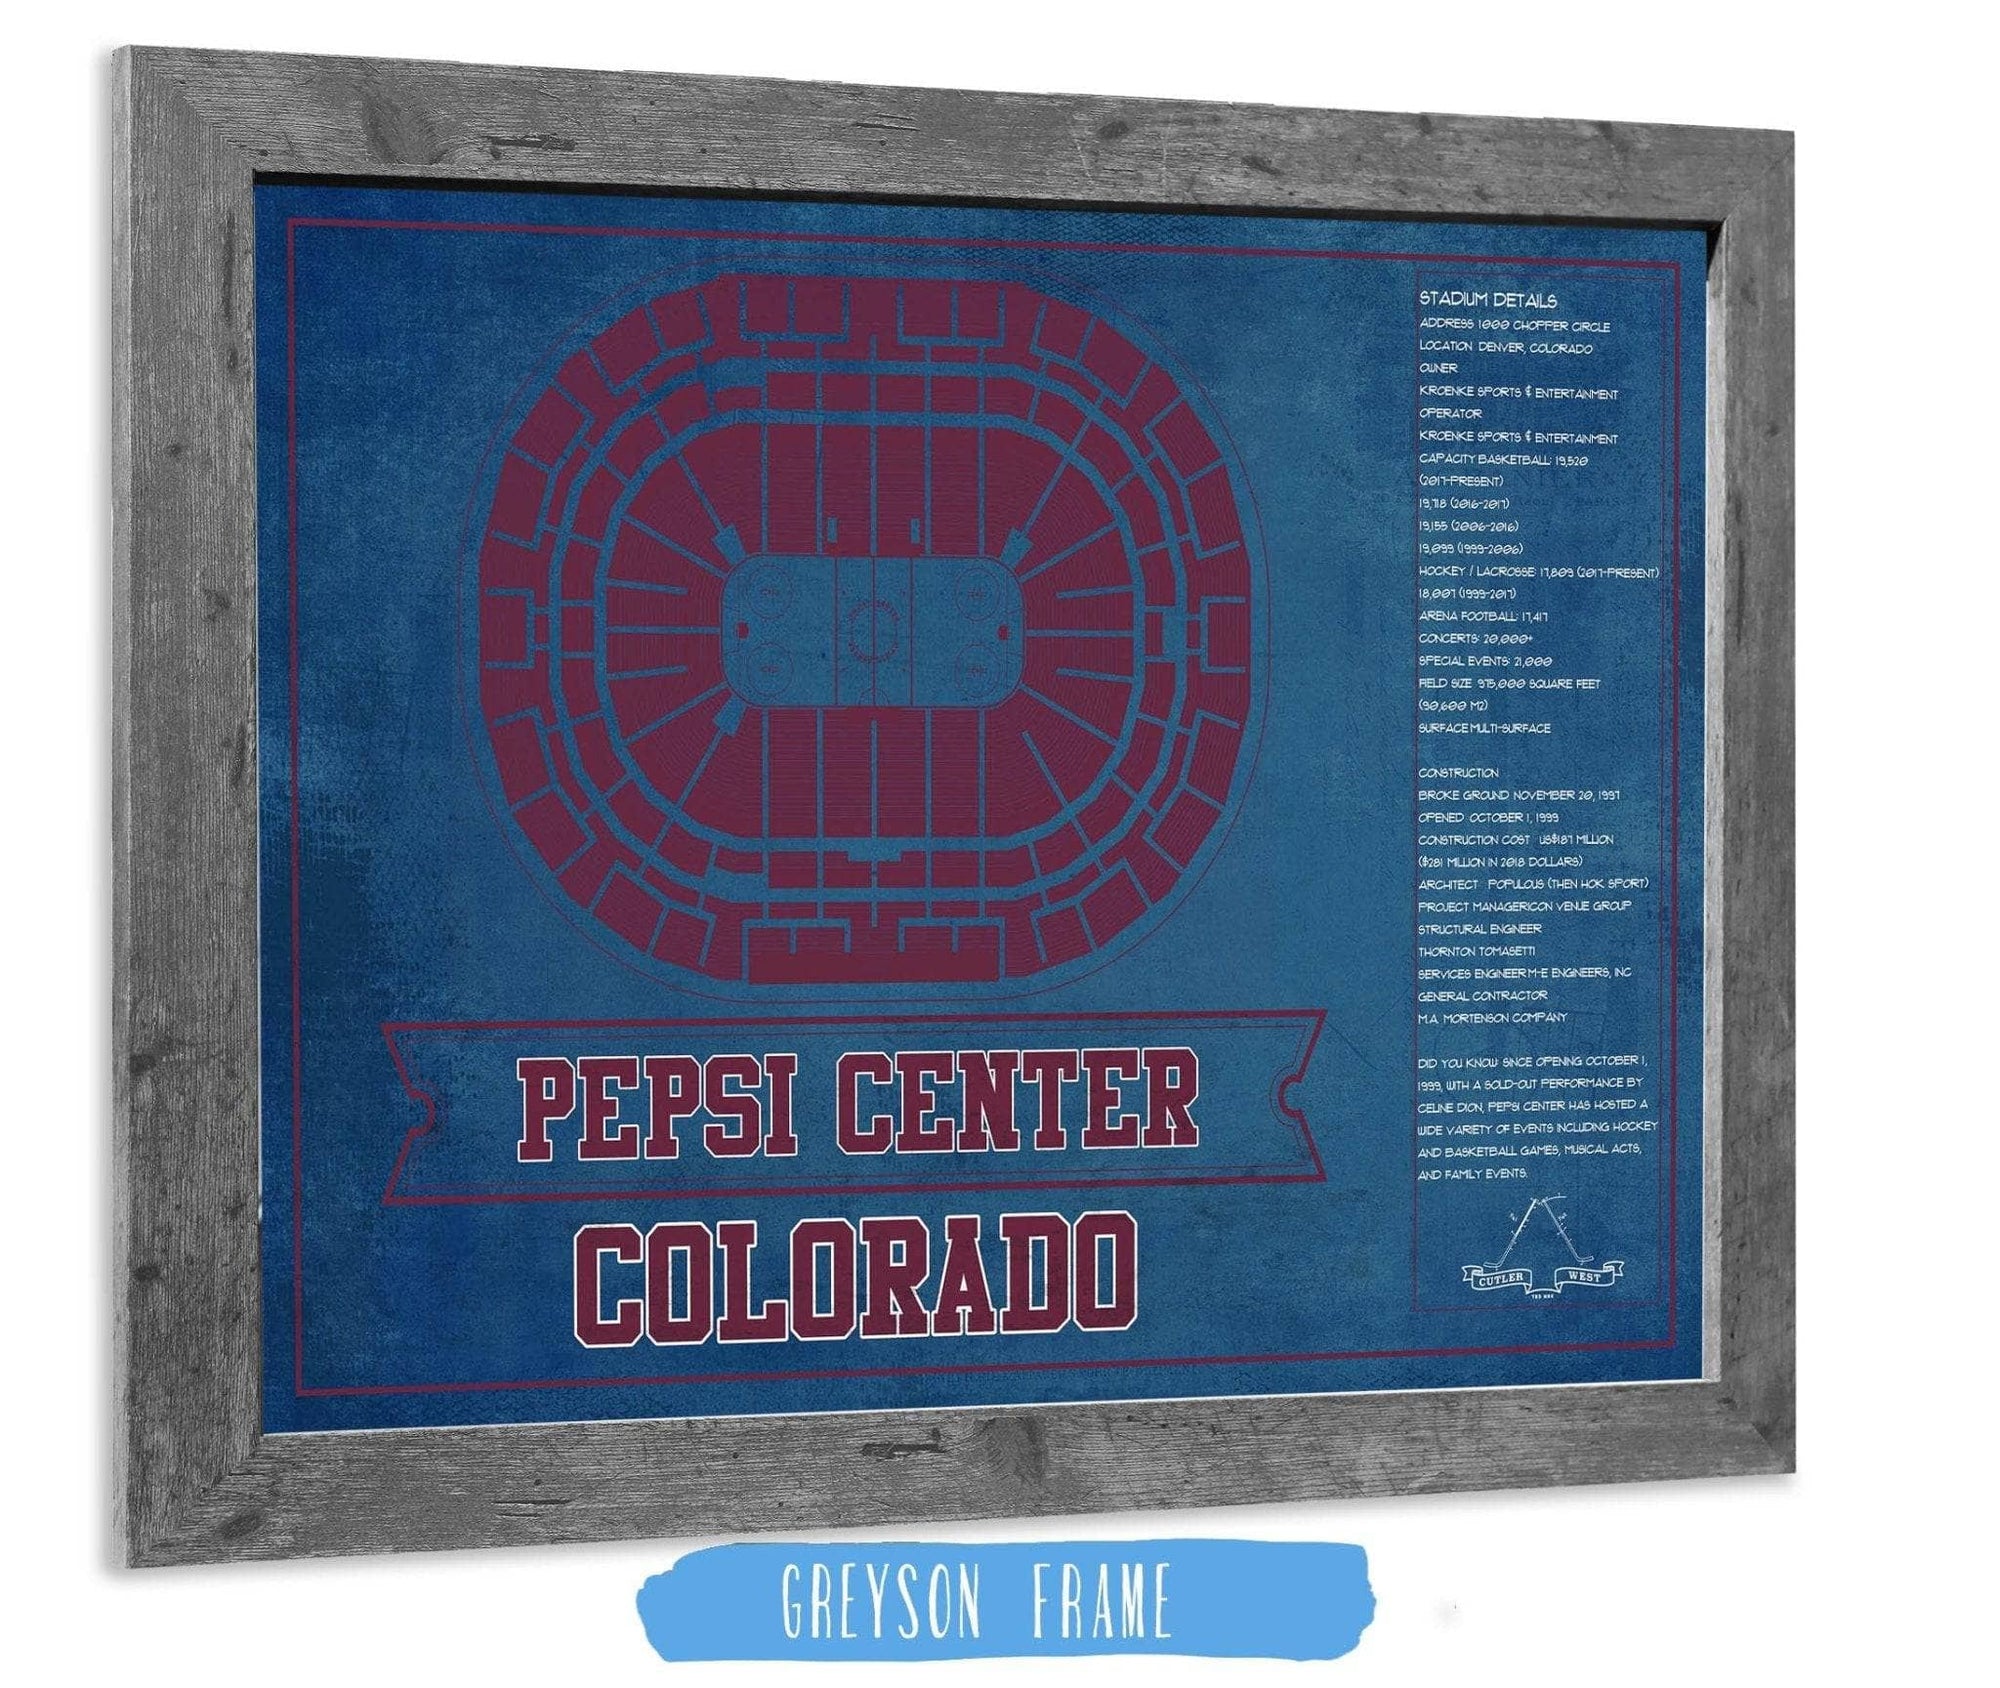 Cutler West 14" x 11" / Greyson Frame Colorado Avalanche Pepsi Center Seating Chart - Vintage Hockey Print 673820545-TEAM